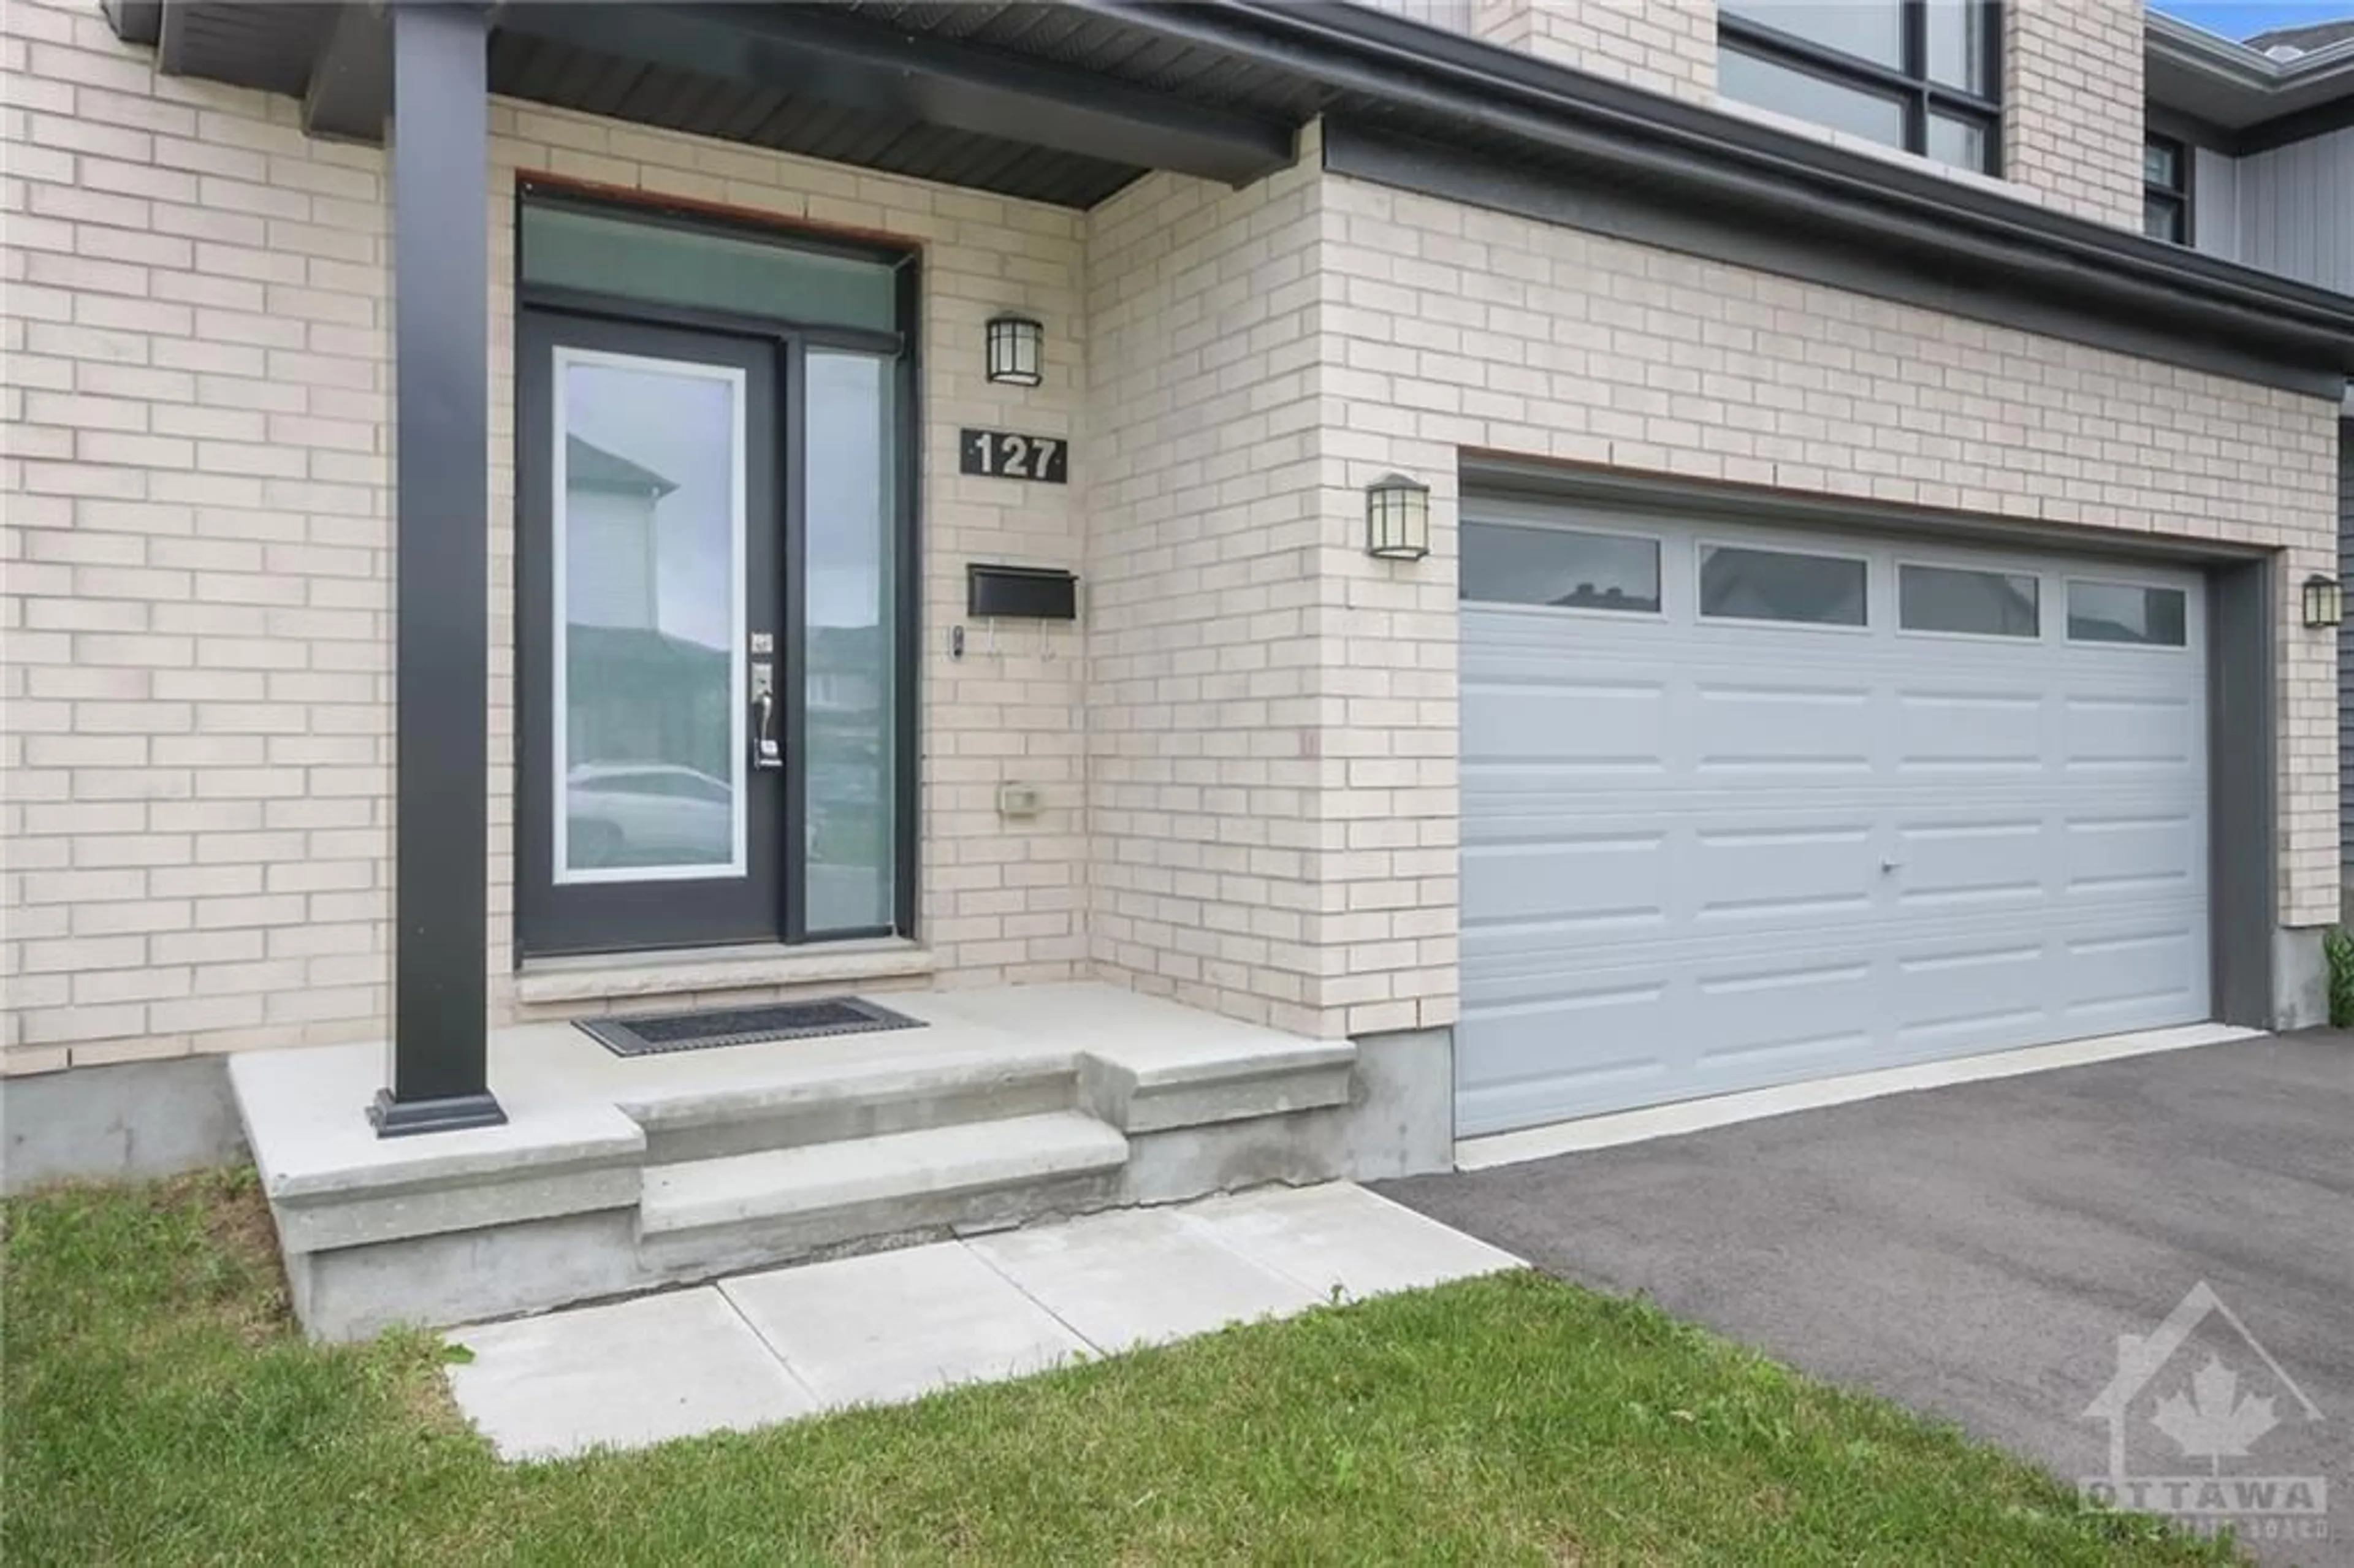 Home with brick exterior material for 127 ALAMO St, Ottawa Ontario K2J 6V7